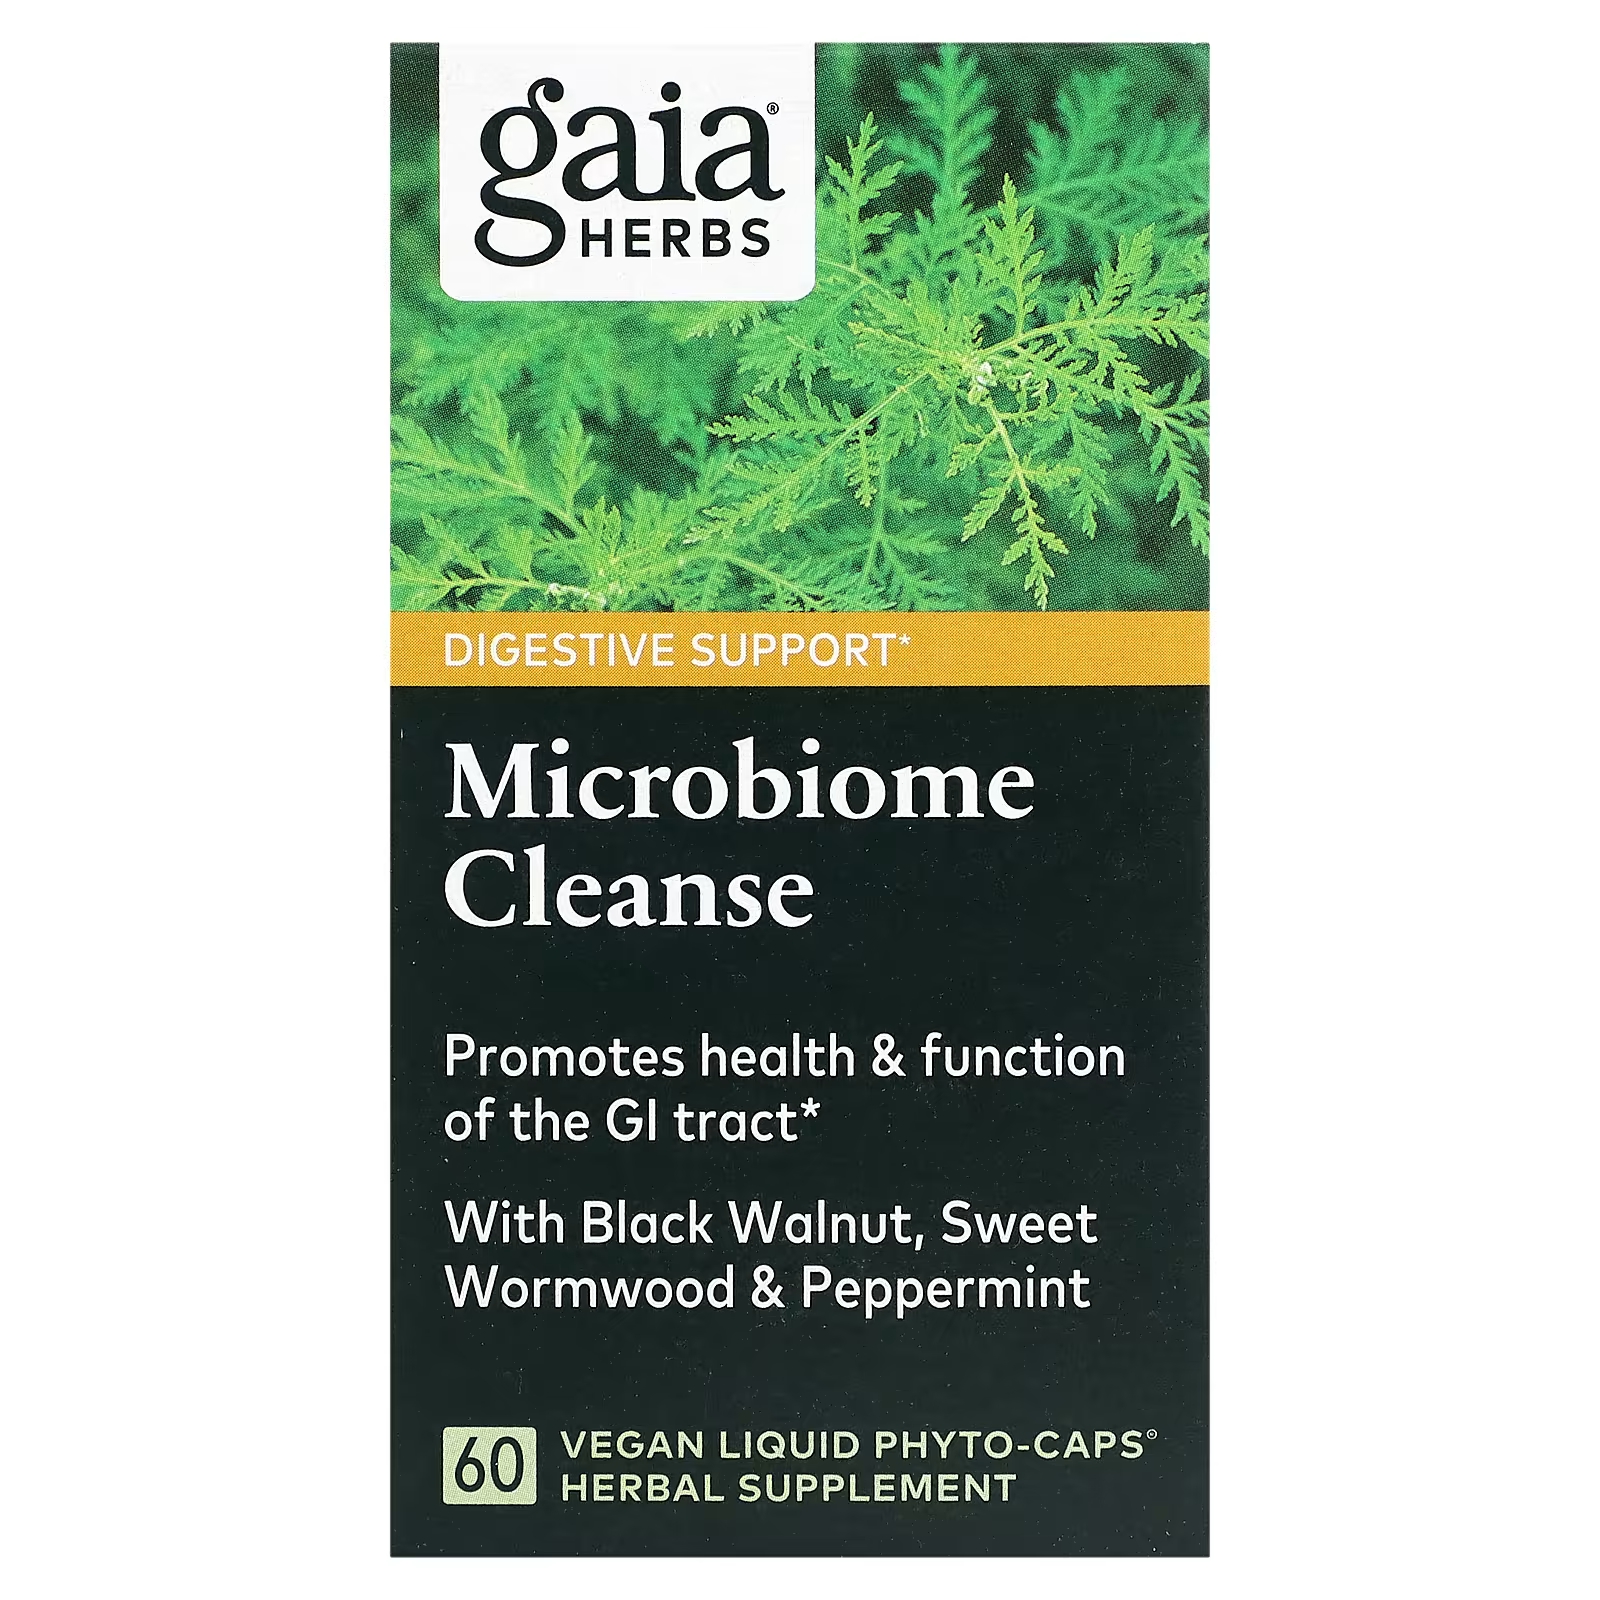 Растительная добавка Gaia Herbs Microbiome Cleanse, 60 жидких фитокапсул растительная добавка gaia herbs microbiome cleanse 60 жидких фитокапсул